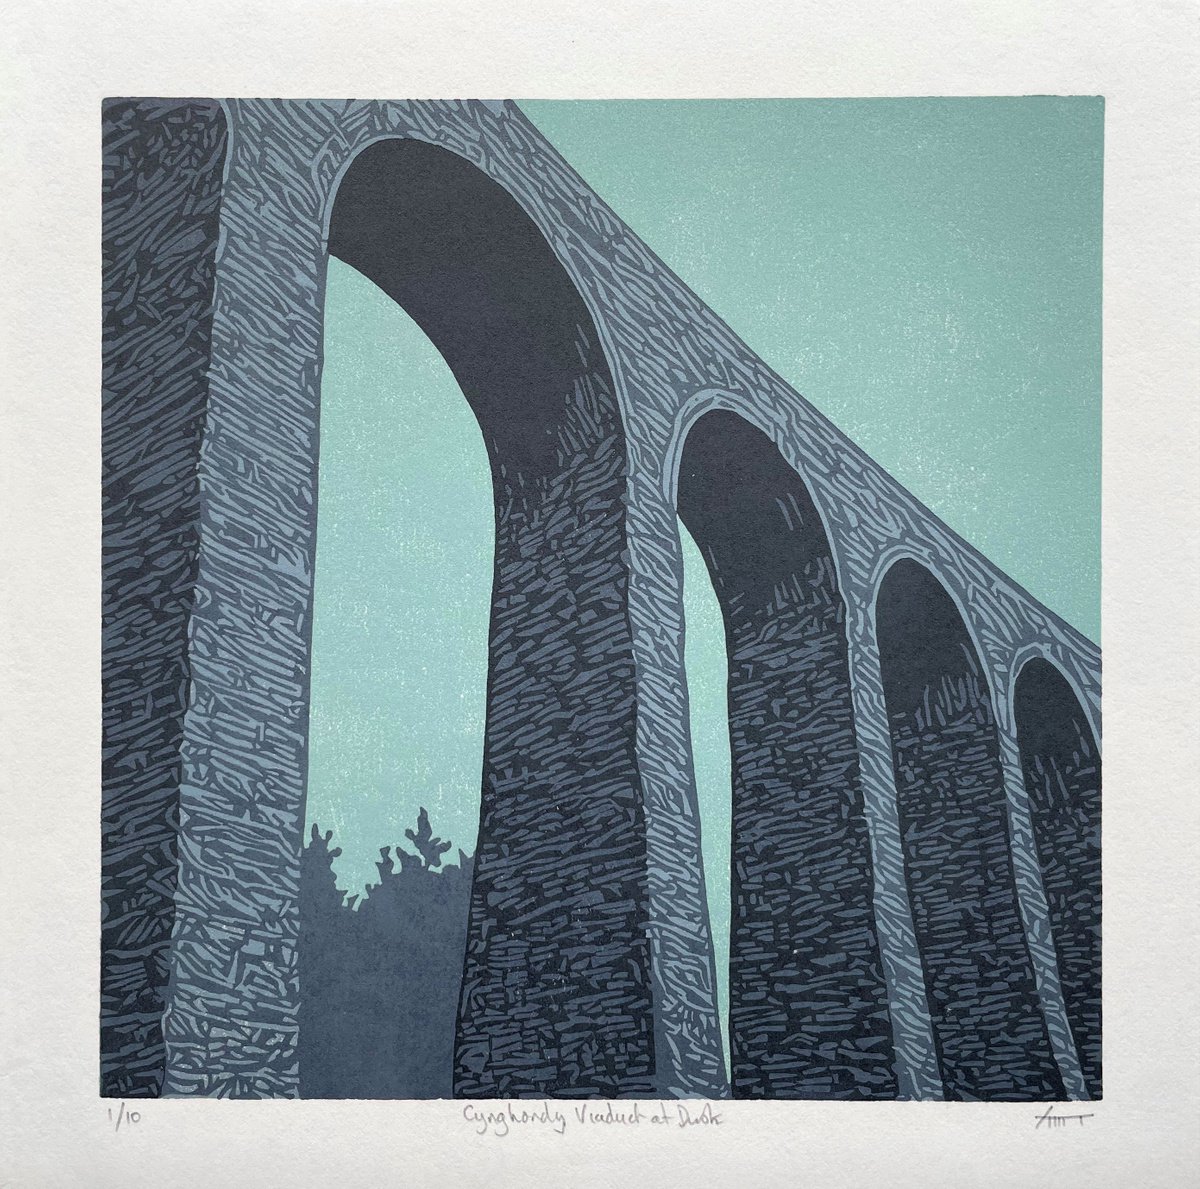 Cynghordy Viaduct at Dusk by Paul Rickard